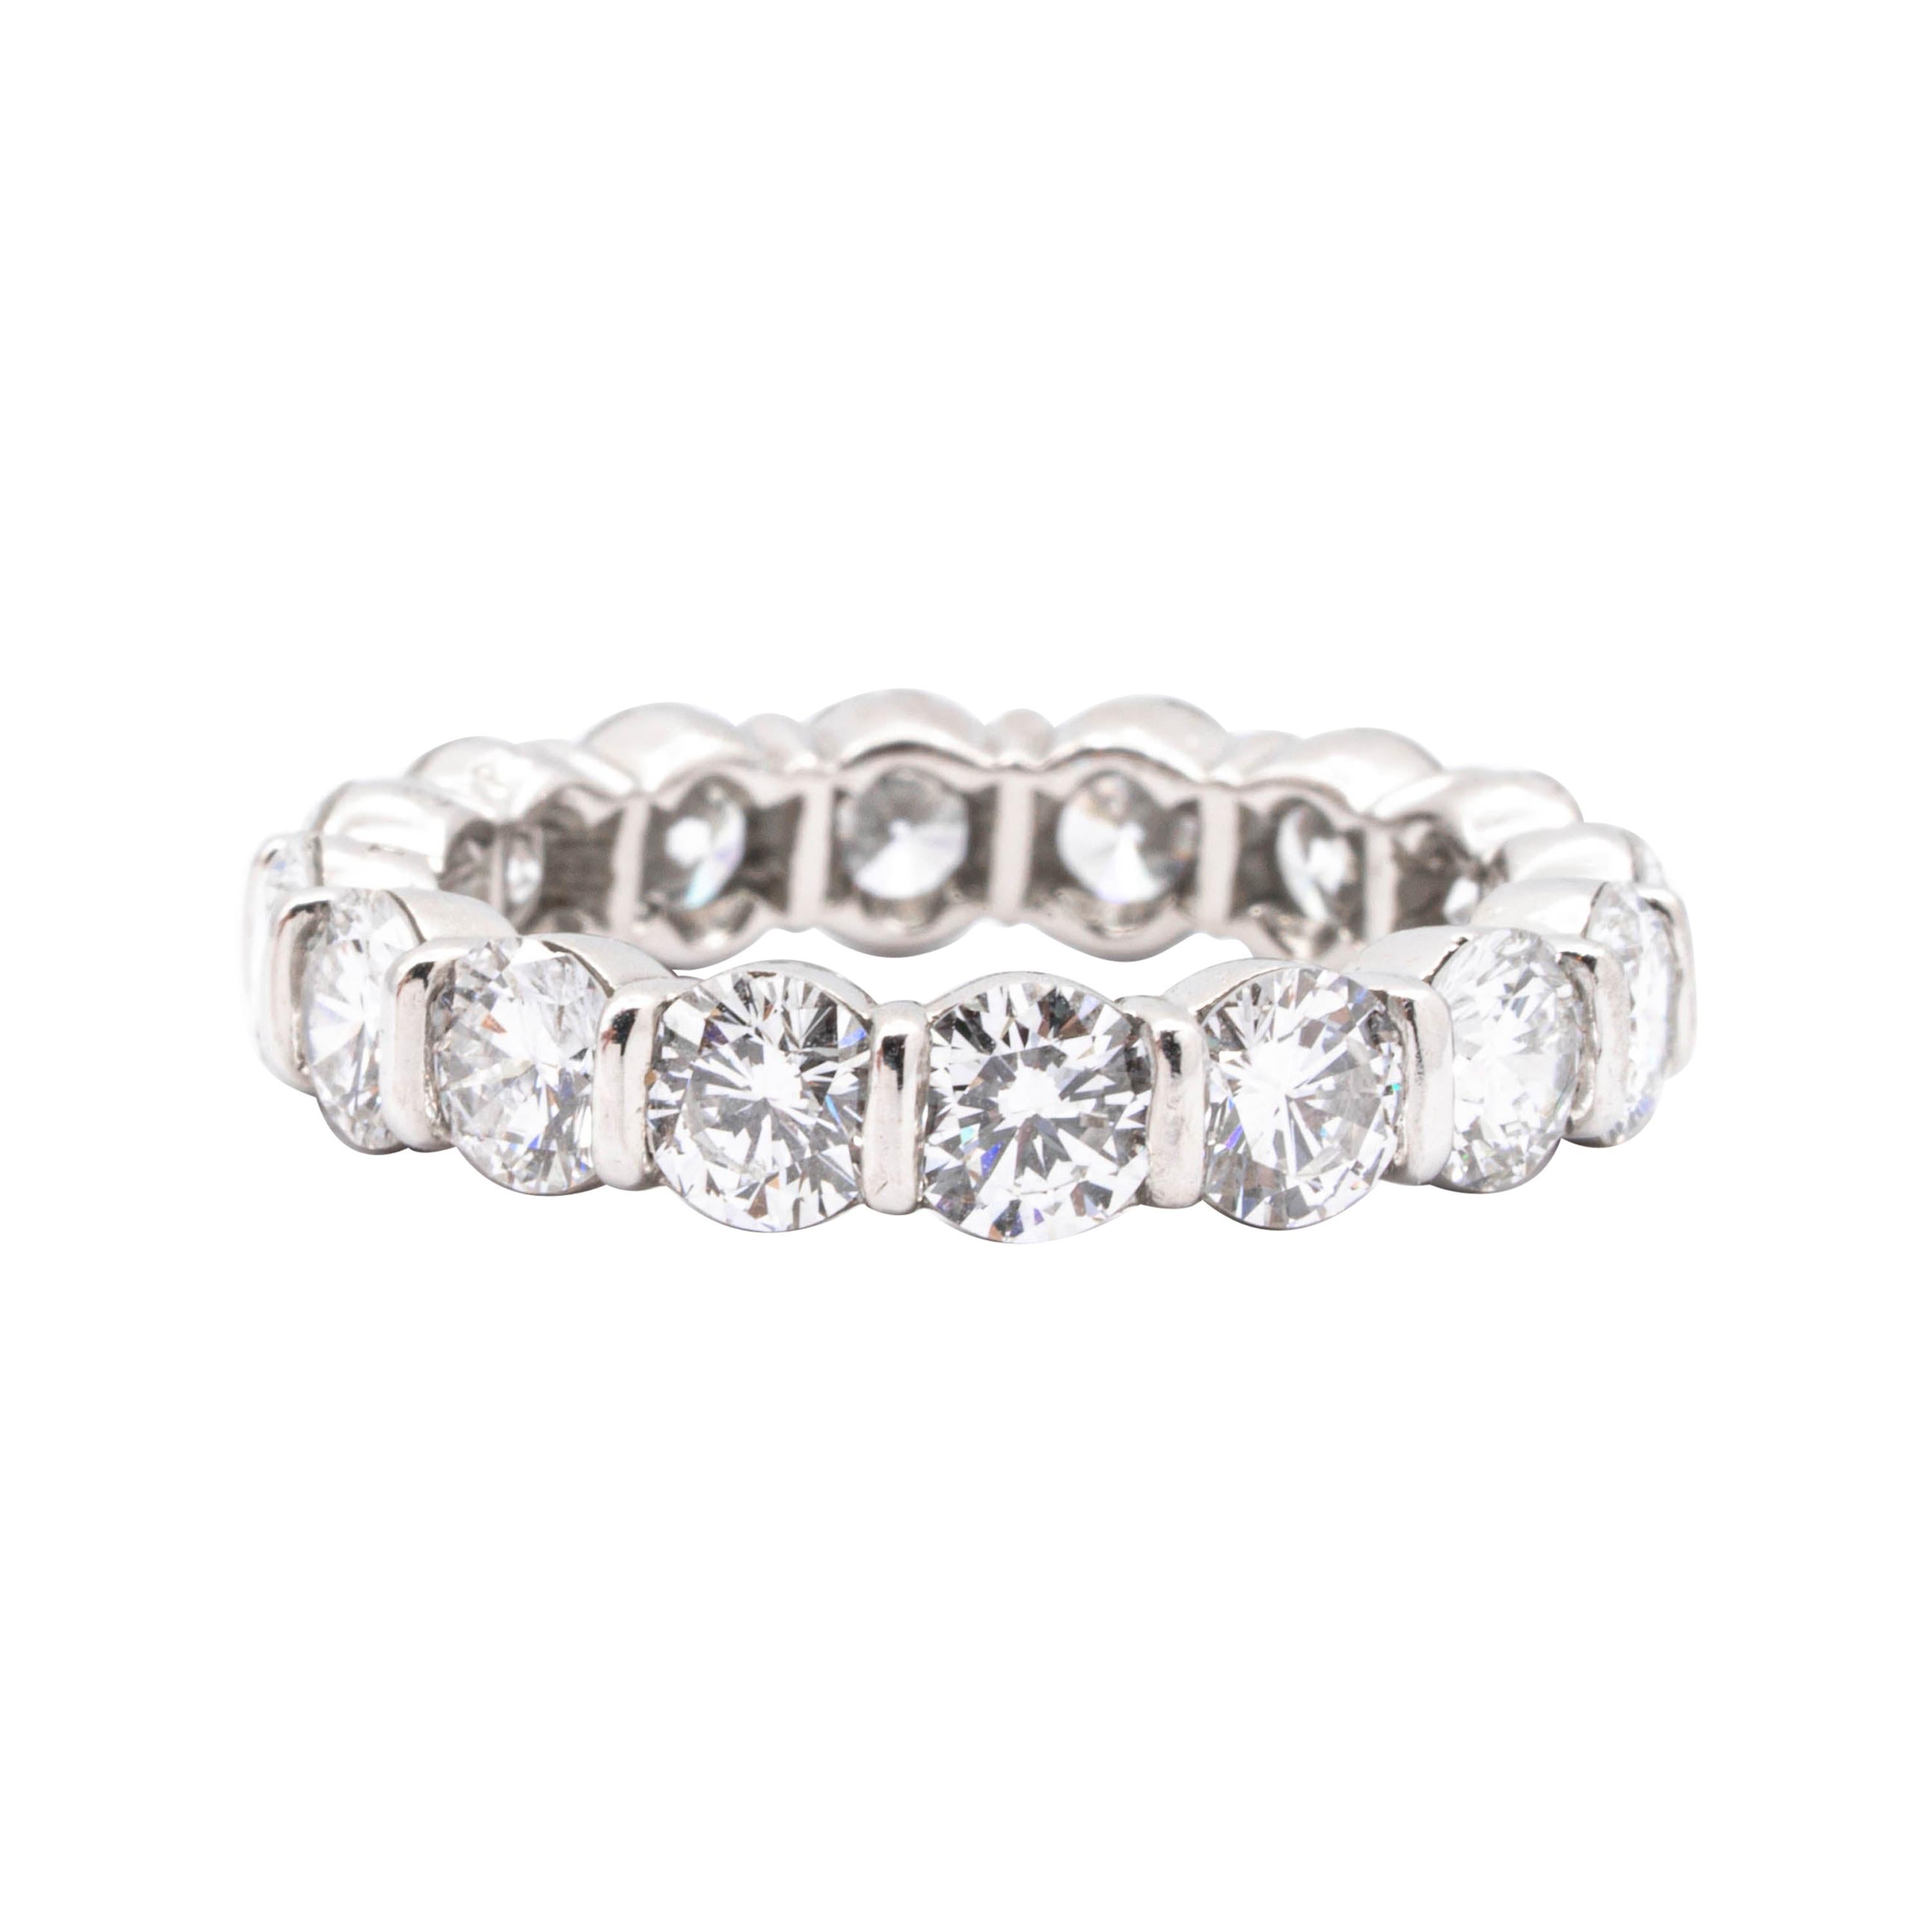 Tiffany & Co. Platinum 3.20 Ct Diamond Eternity Ring Bar Set with Round Cuts 4mm